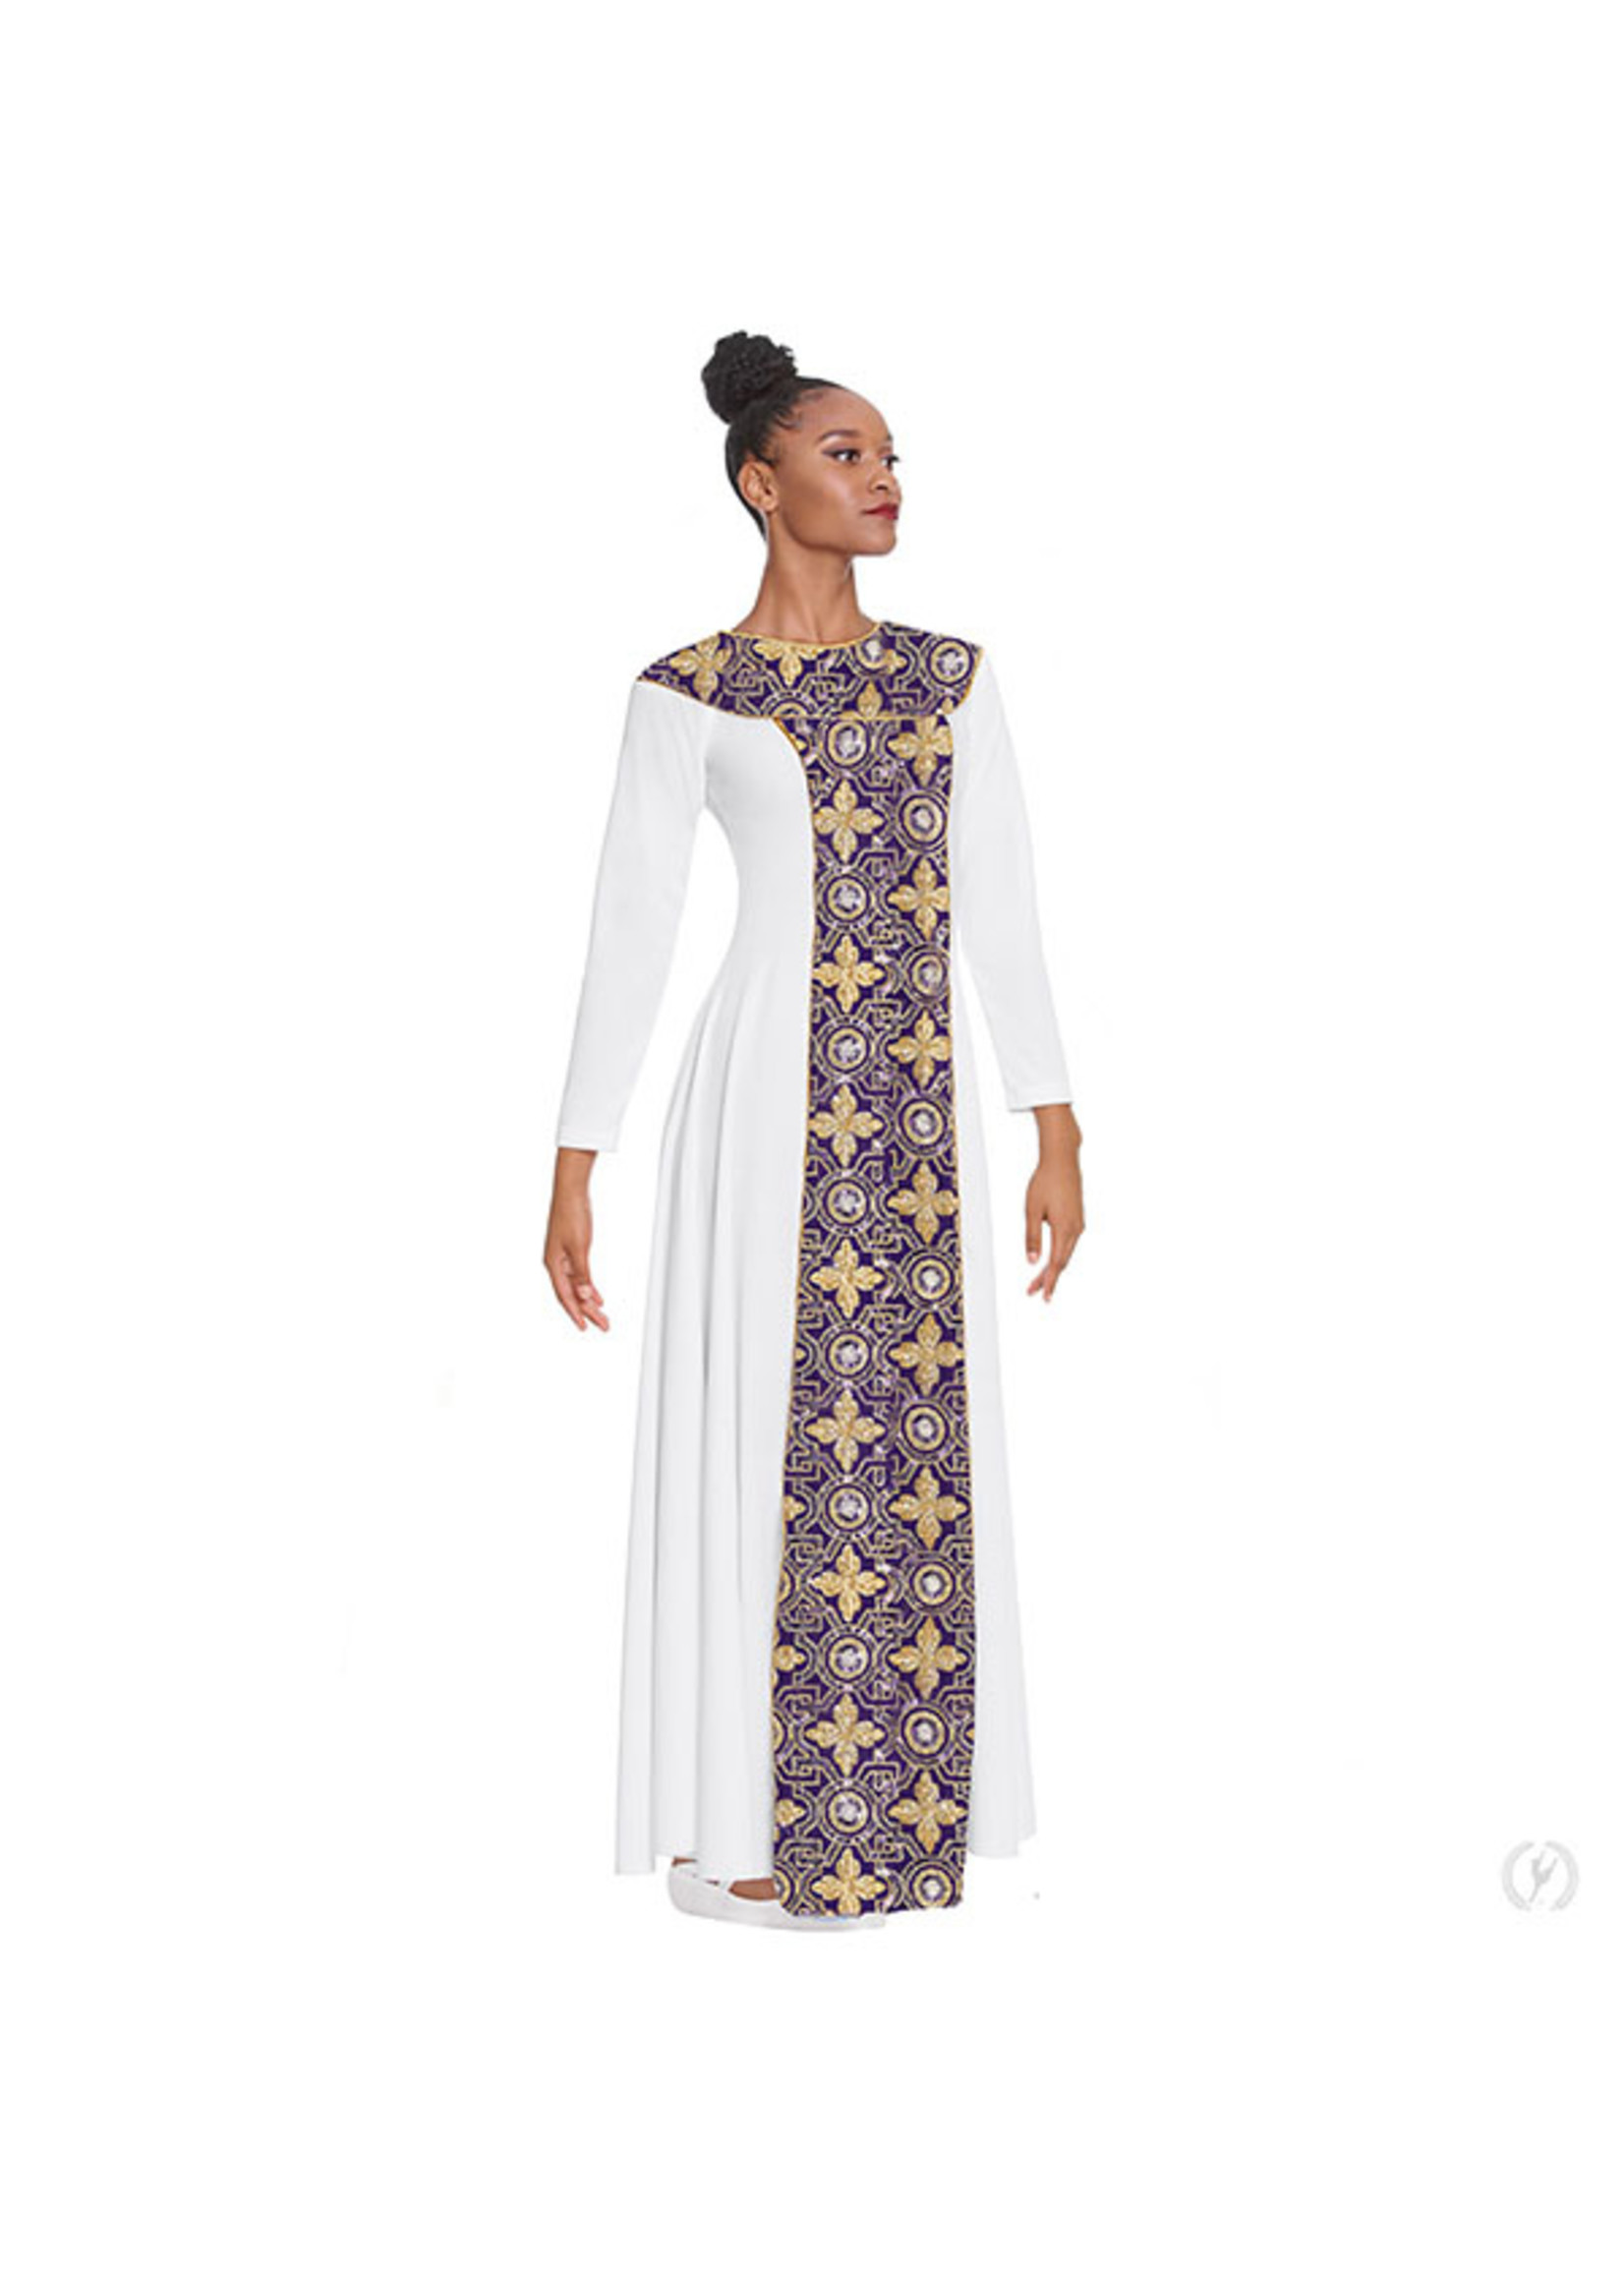 Tabernacle Long Sleeve Praise Dress